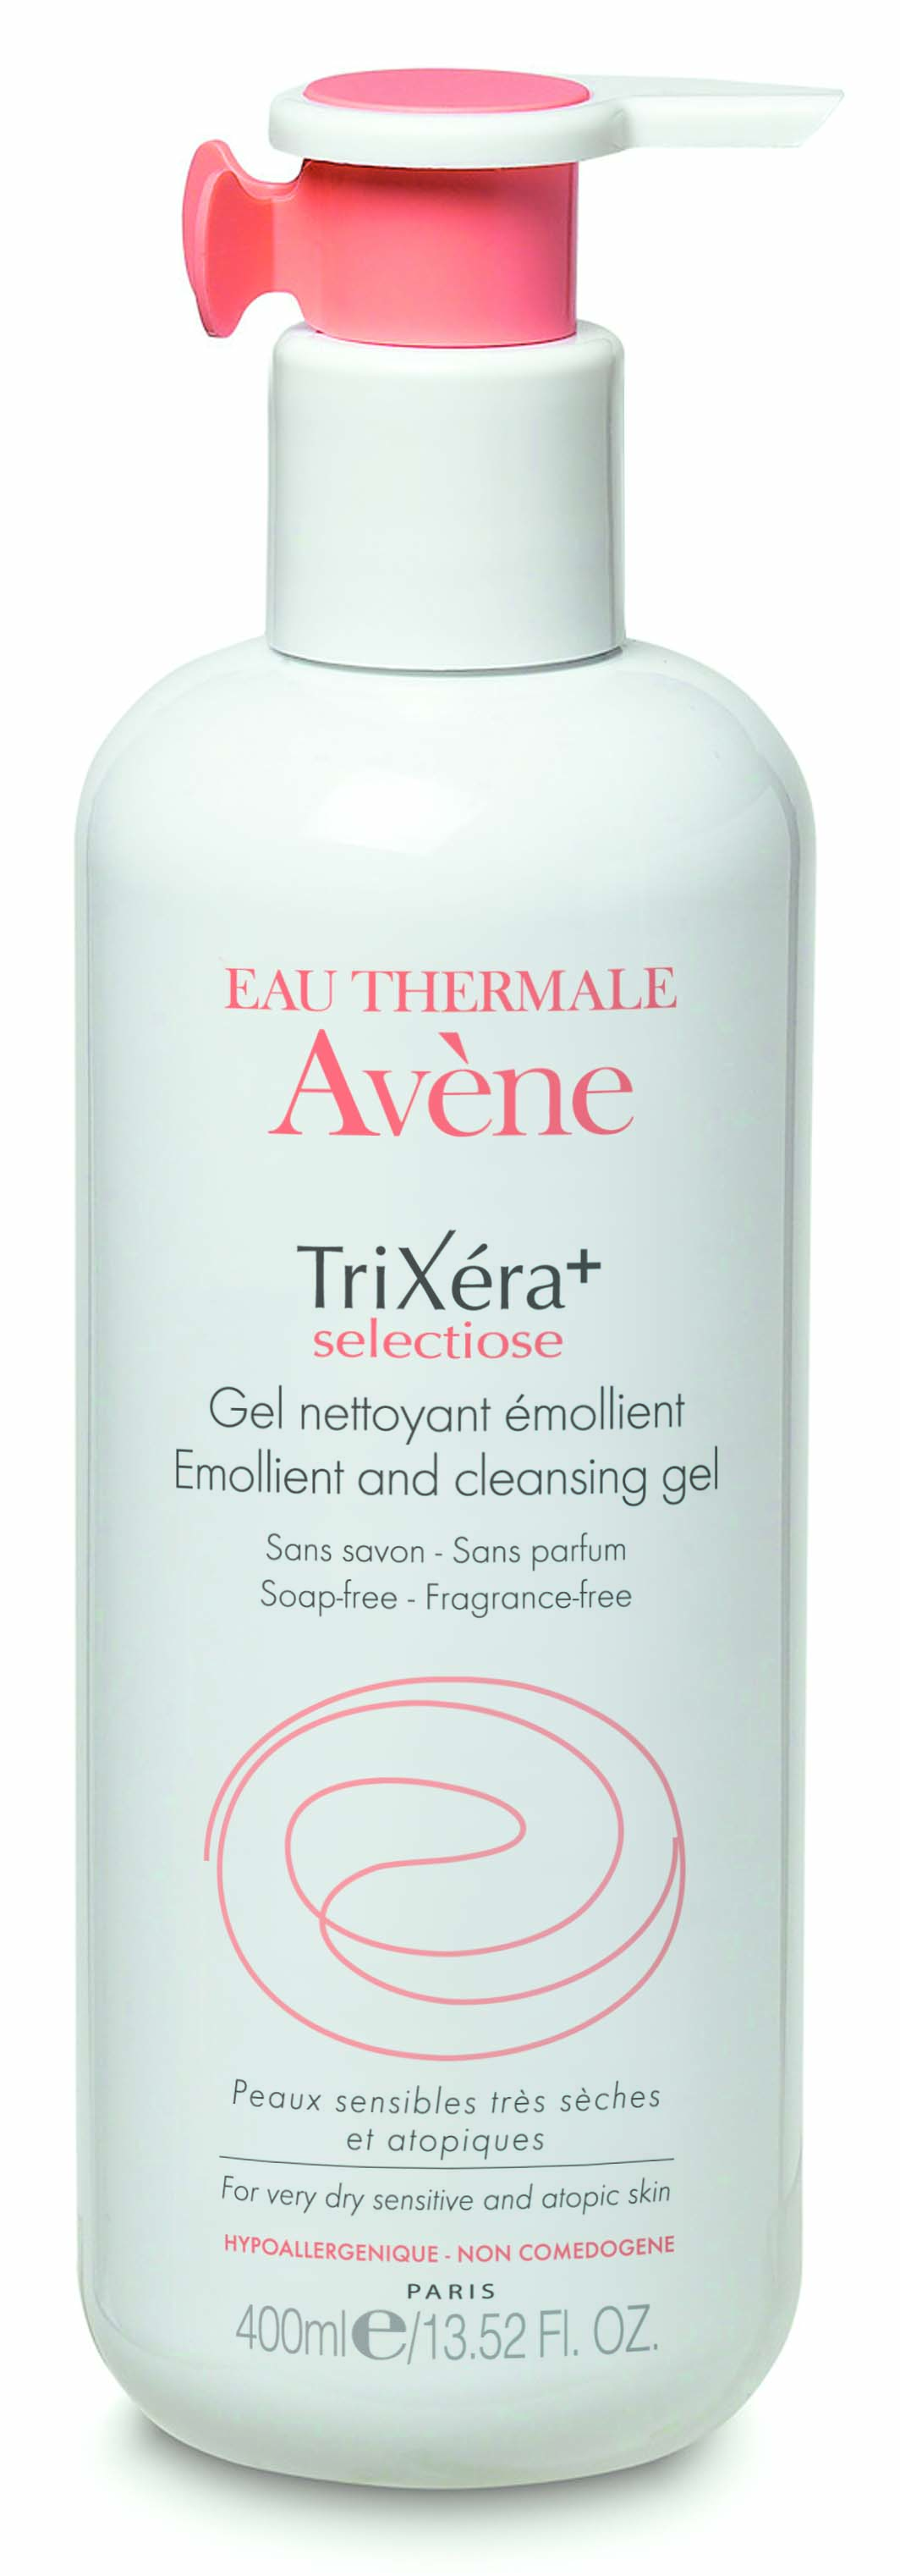 Avene Trixéra+ Selectiose Gel detergente emolliente 400 ml